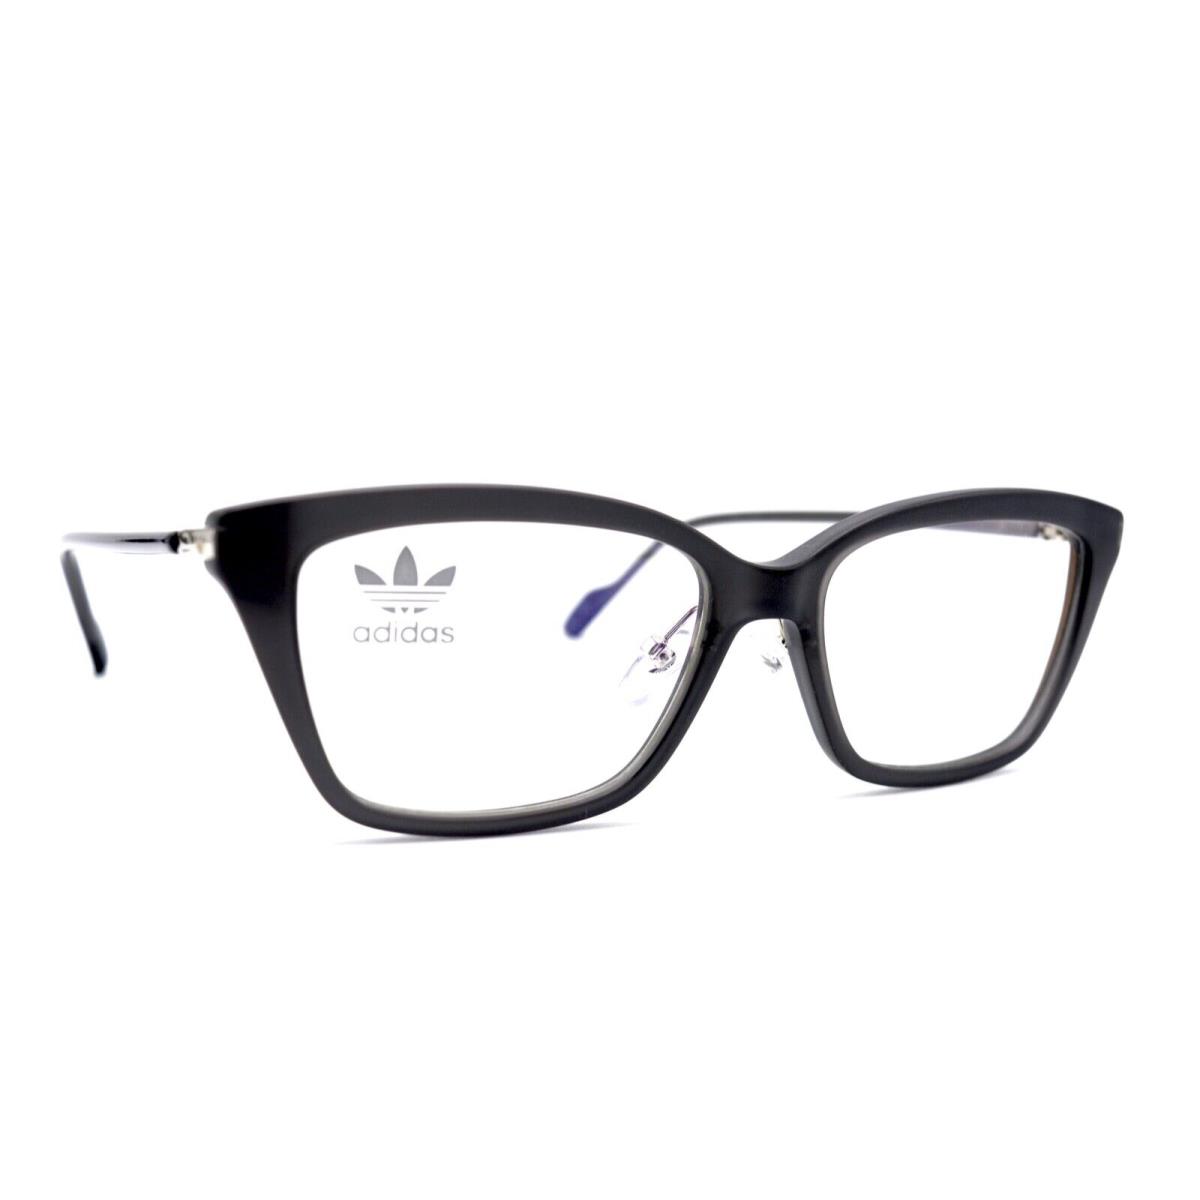 Adidas AOK008O.070.00 Matte Grey Eyeglasses Frames RX 53-16 23